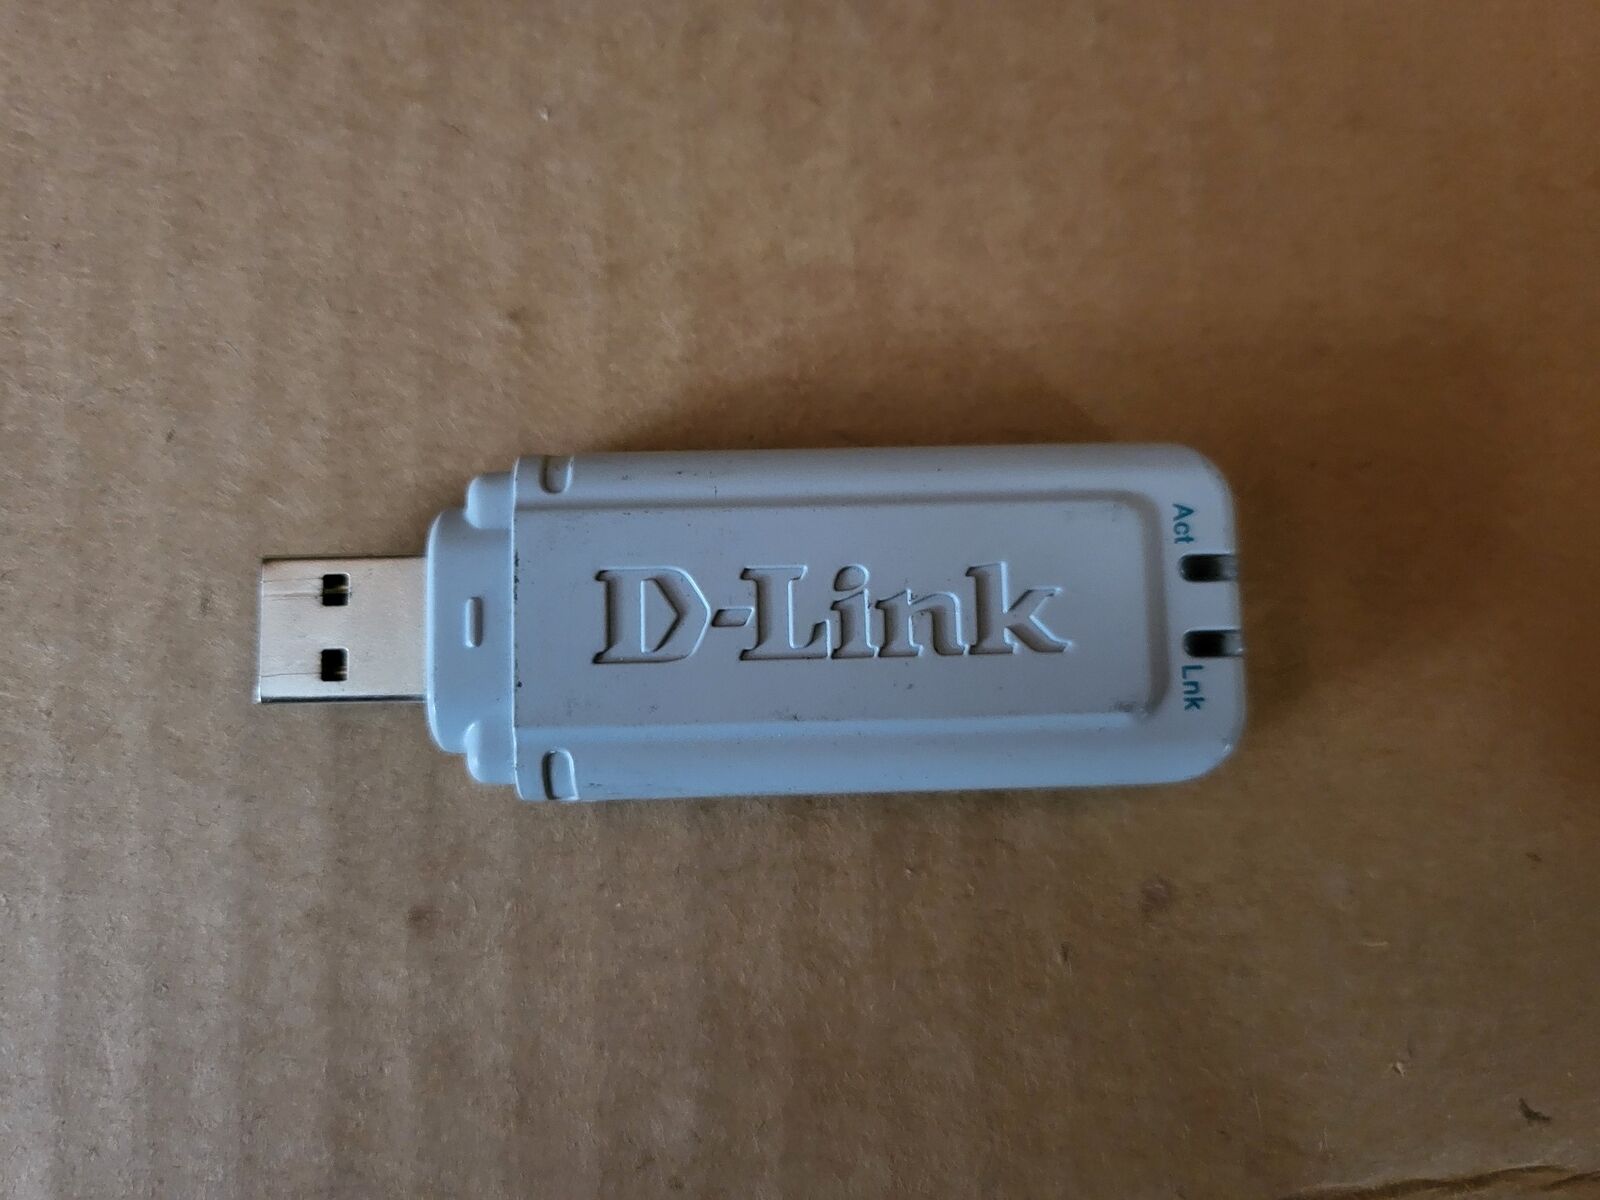 D-LINK DWL-G122 WIRELESS G 802.11G 54MBPS USB ADAPTER L1-14(2)